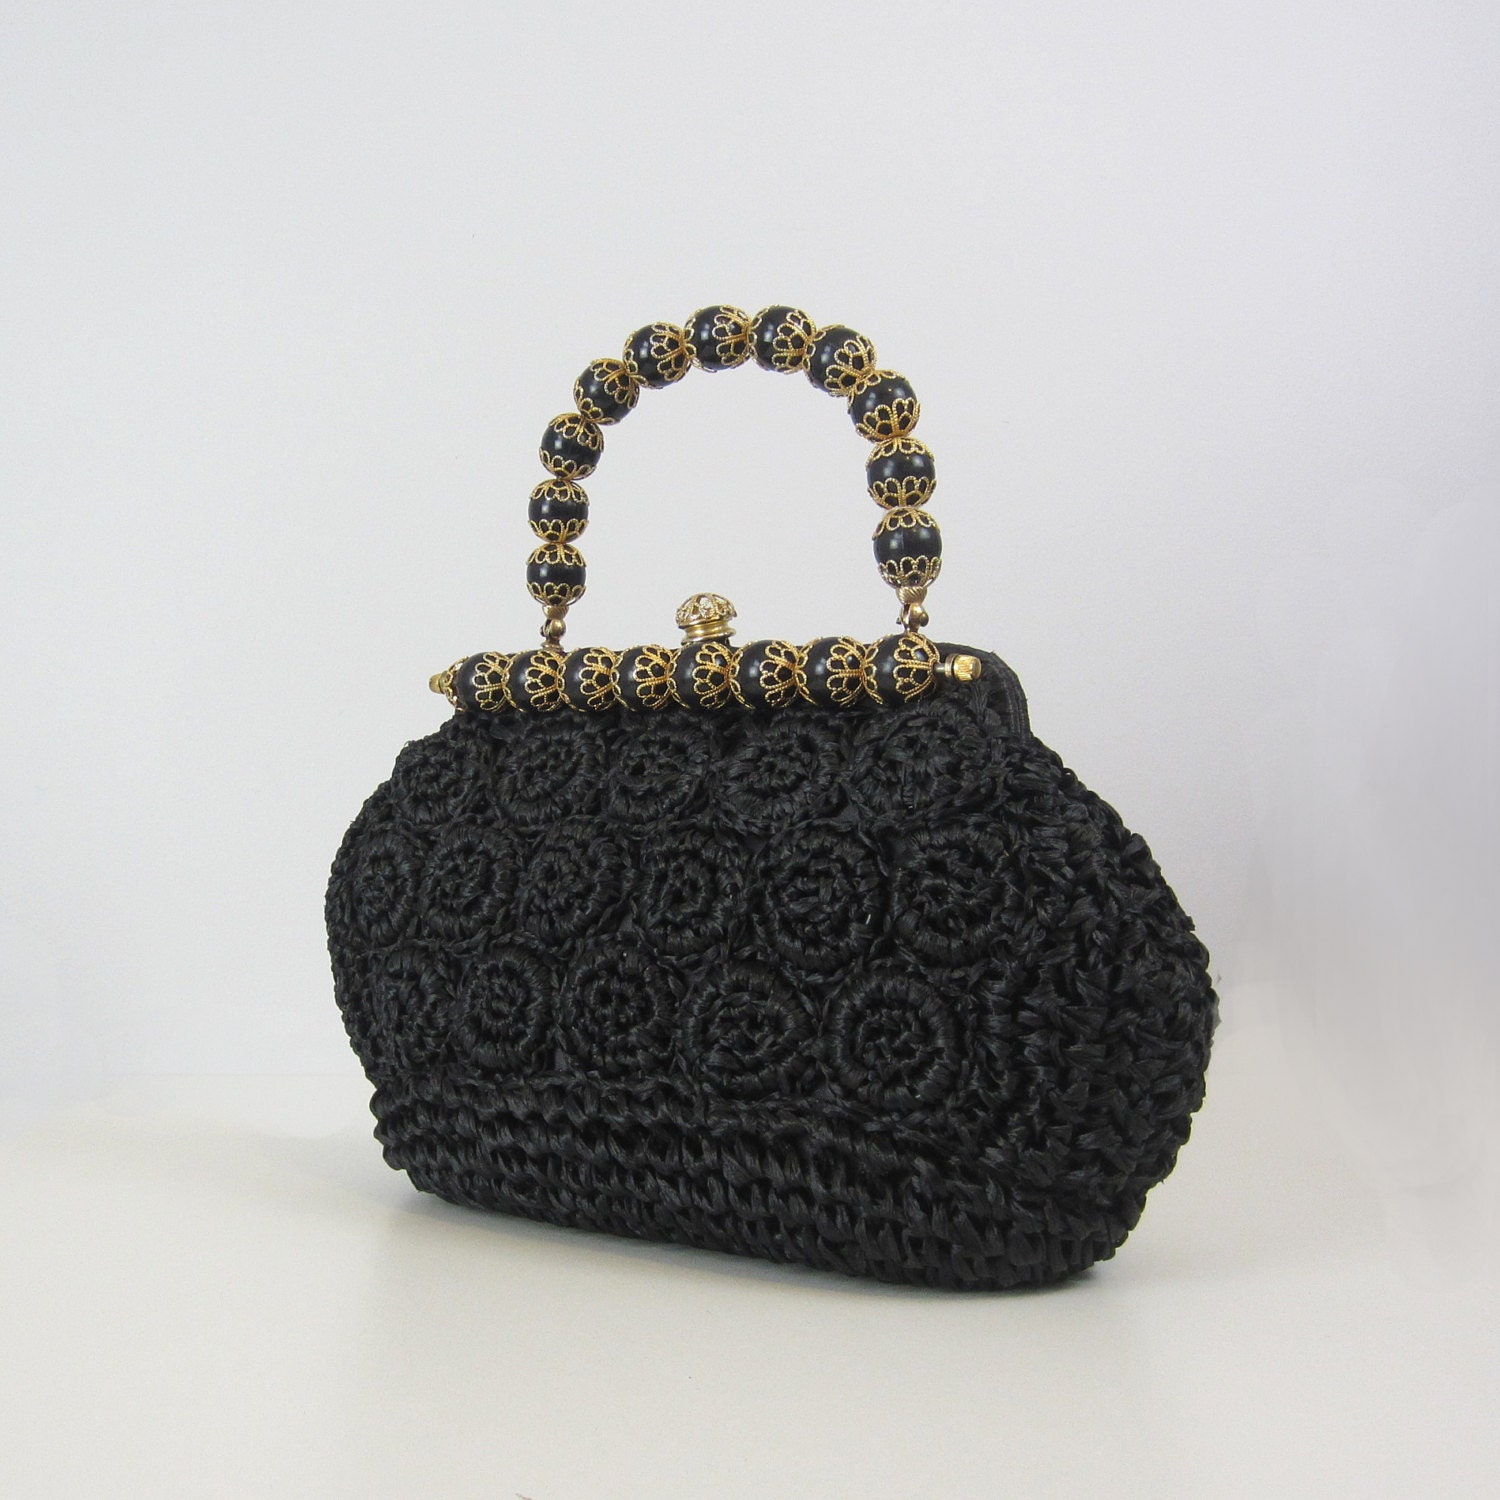 vintage woven straw handbag / 1960s straw bag / black / gold / woven purse / beaded - archetypevintage